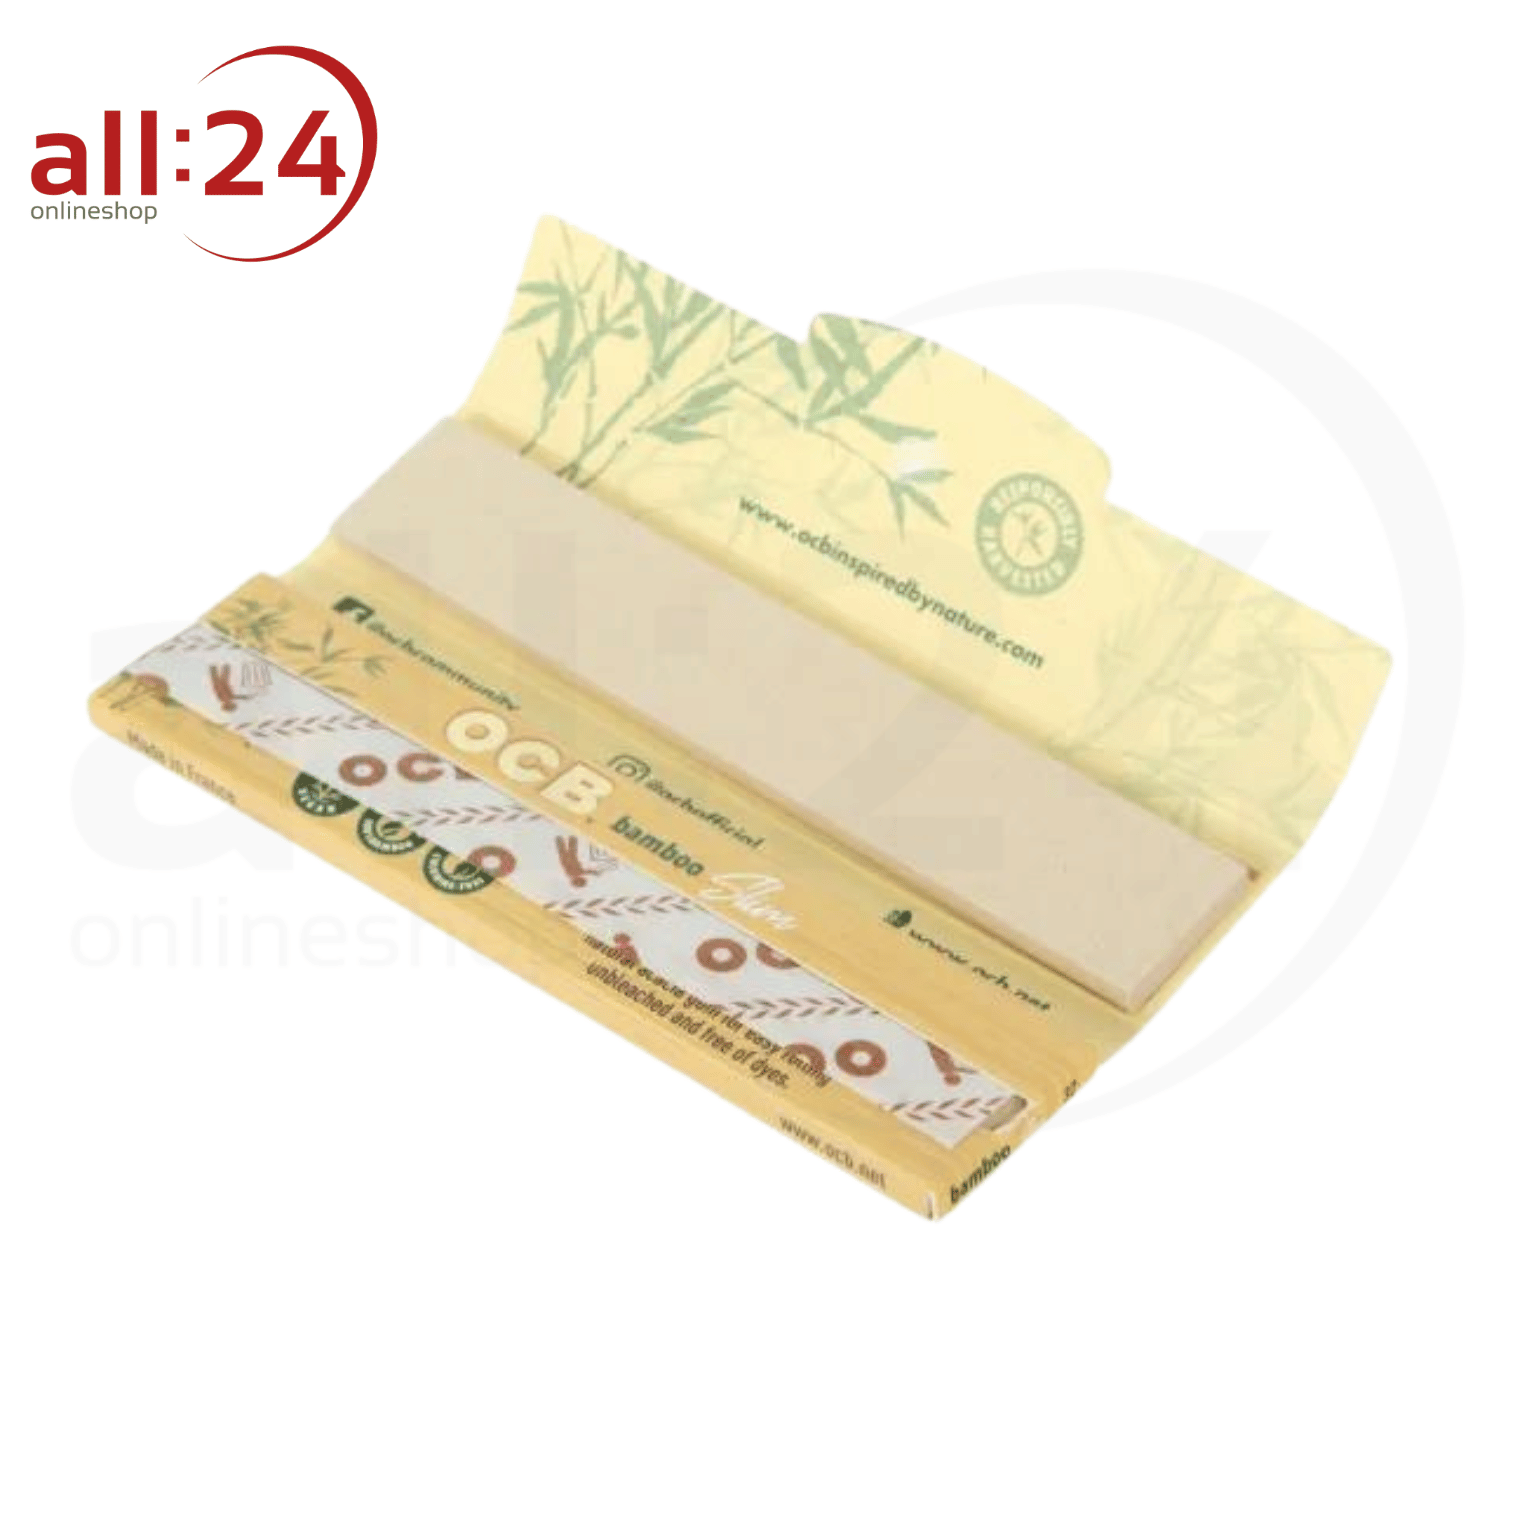 BOX OCB Bamboo King Size Slim Zigarettenpapier + Filter Tips - 50 Stück, Ungebleichte Bambusfasern 